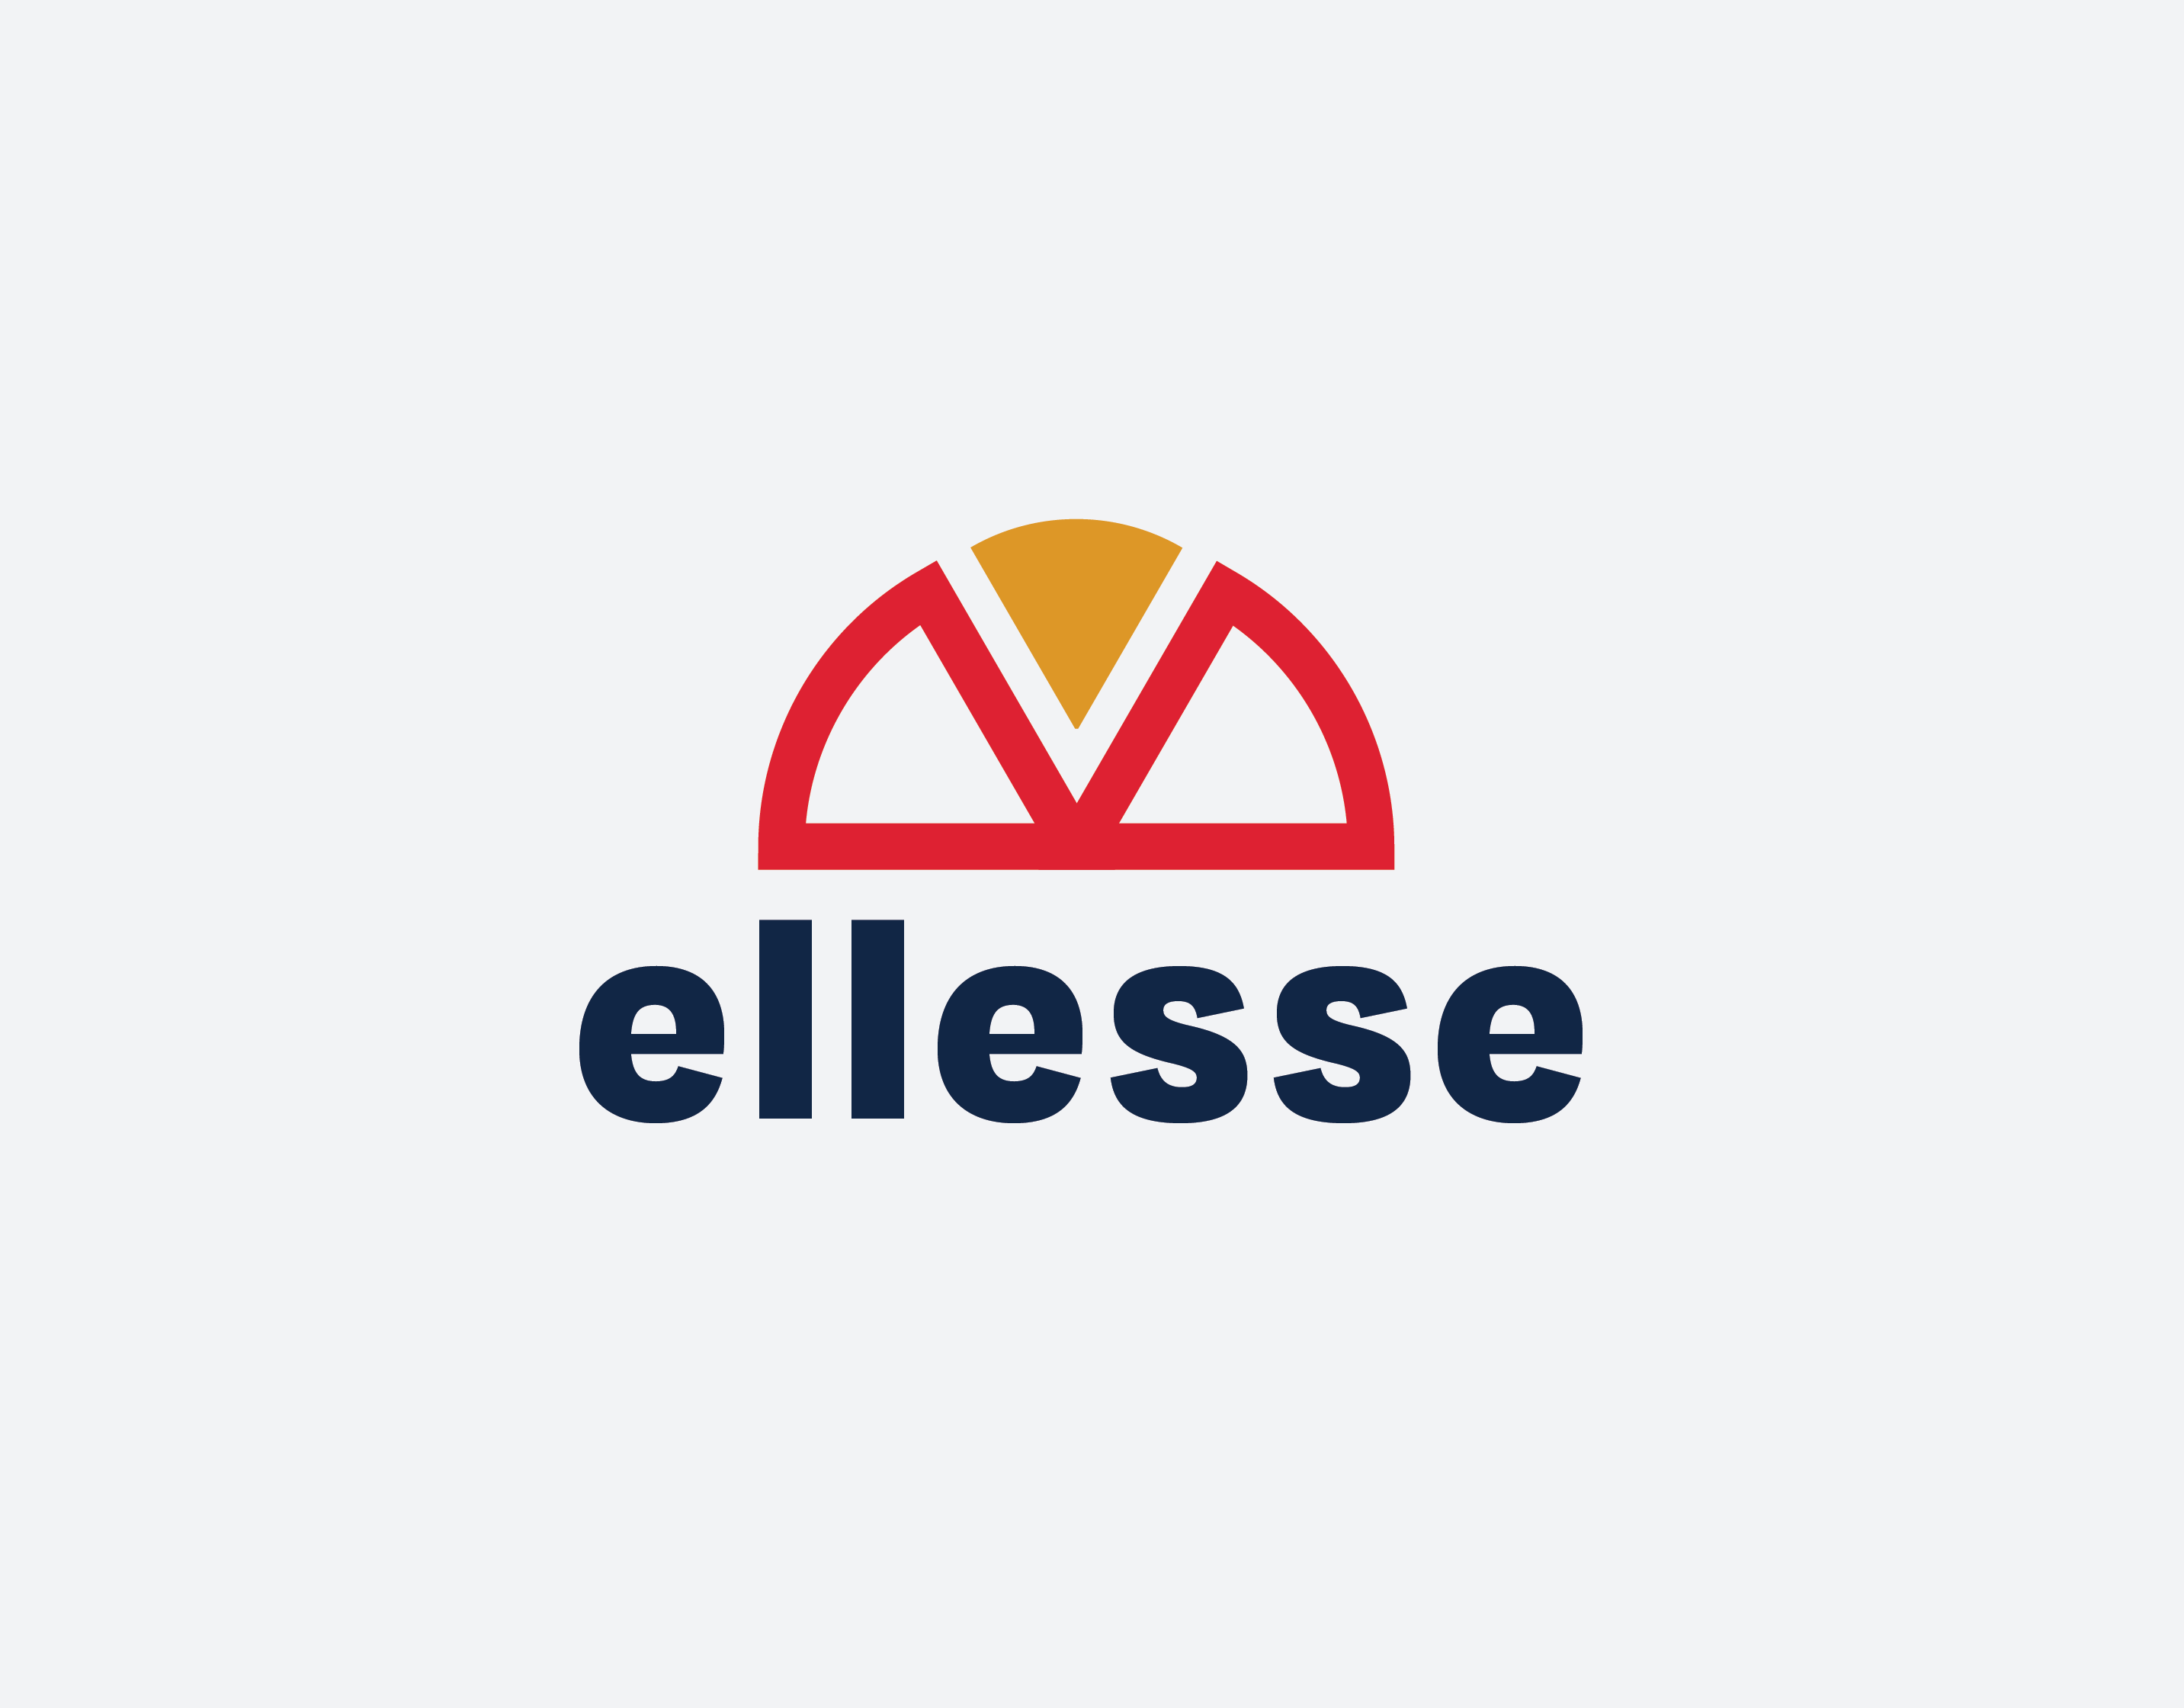 Ellesse - Crunchbase Company Profile & Funding